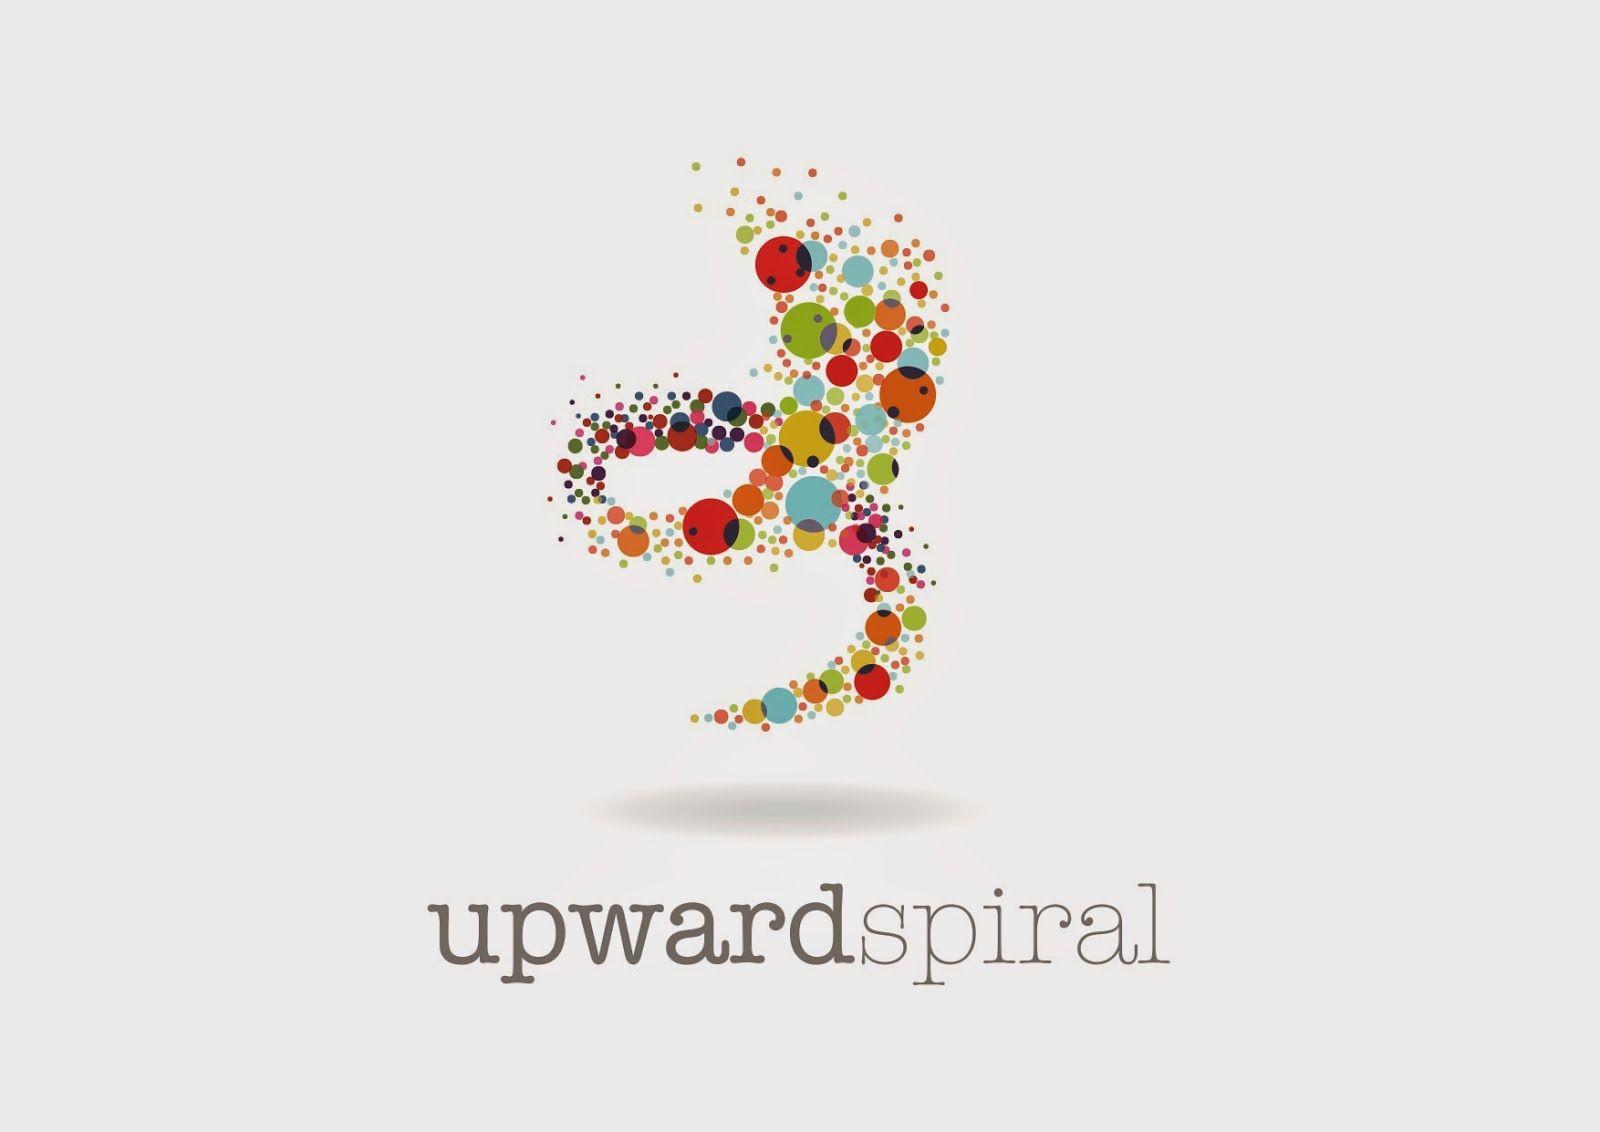 Upward Spiral Logo - Siraaj Ryklief illustration & design: Upward Spiral - Logo